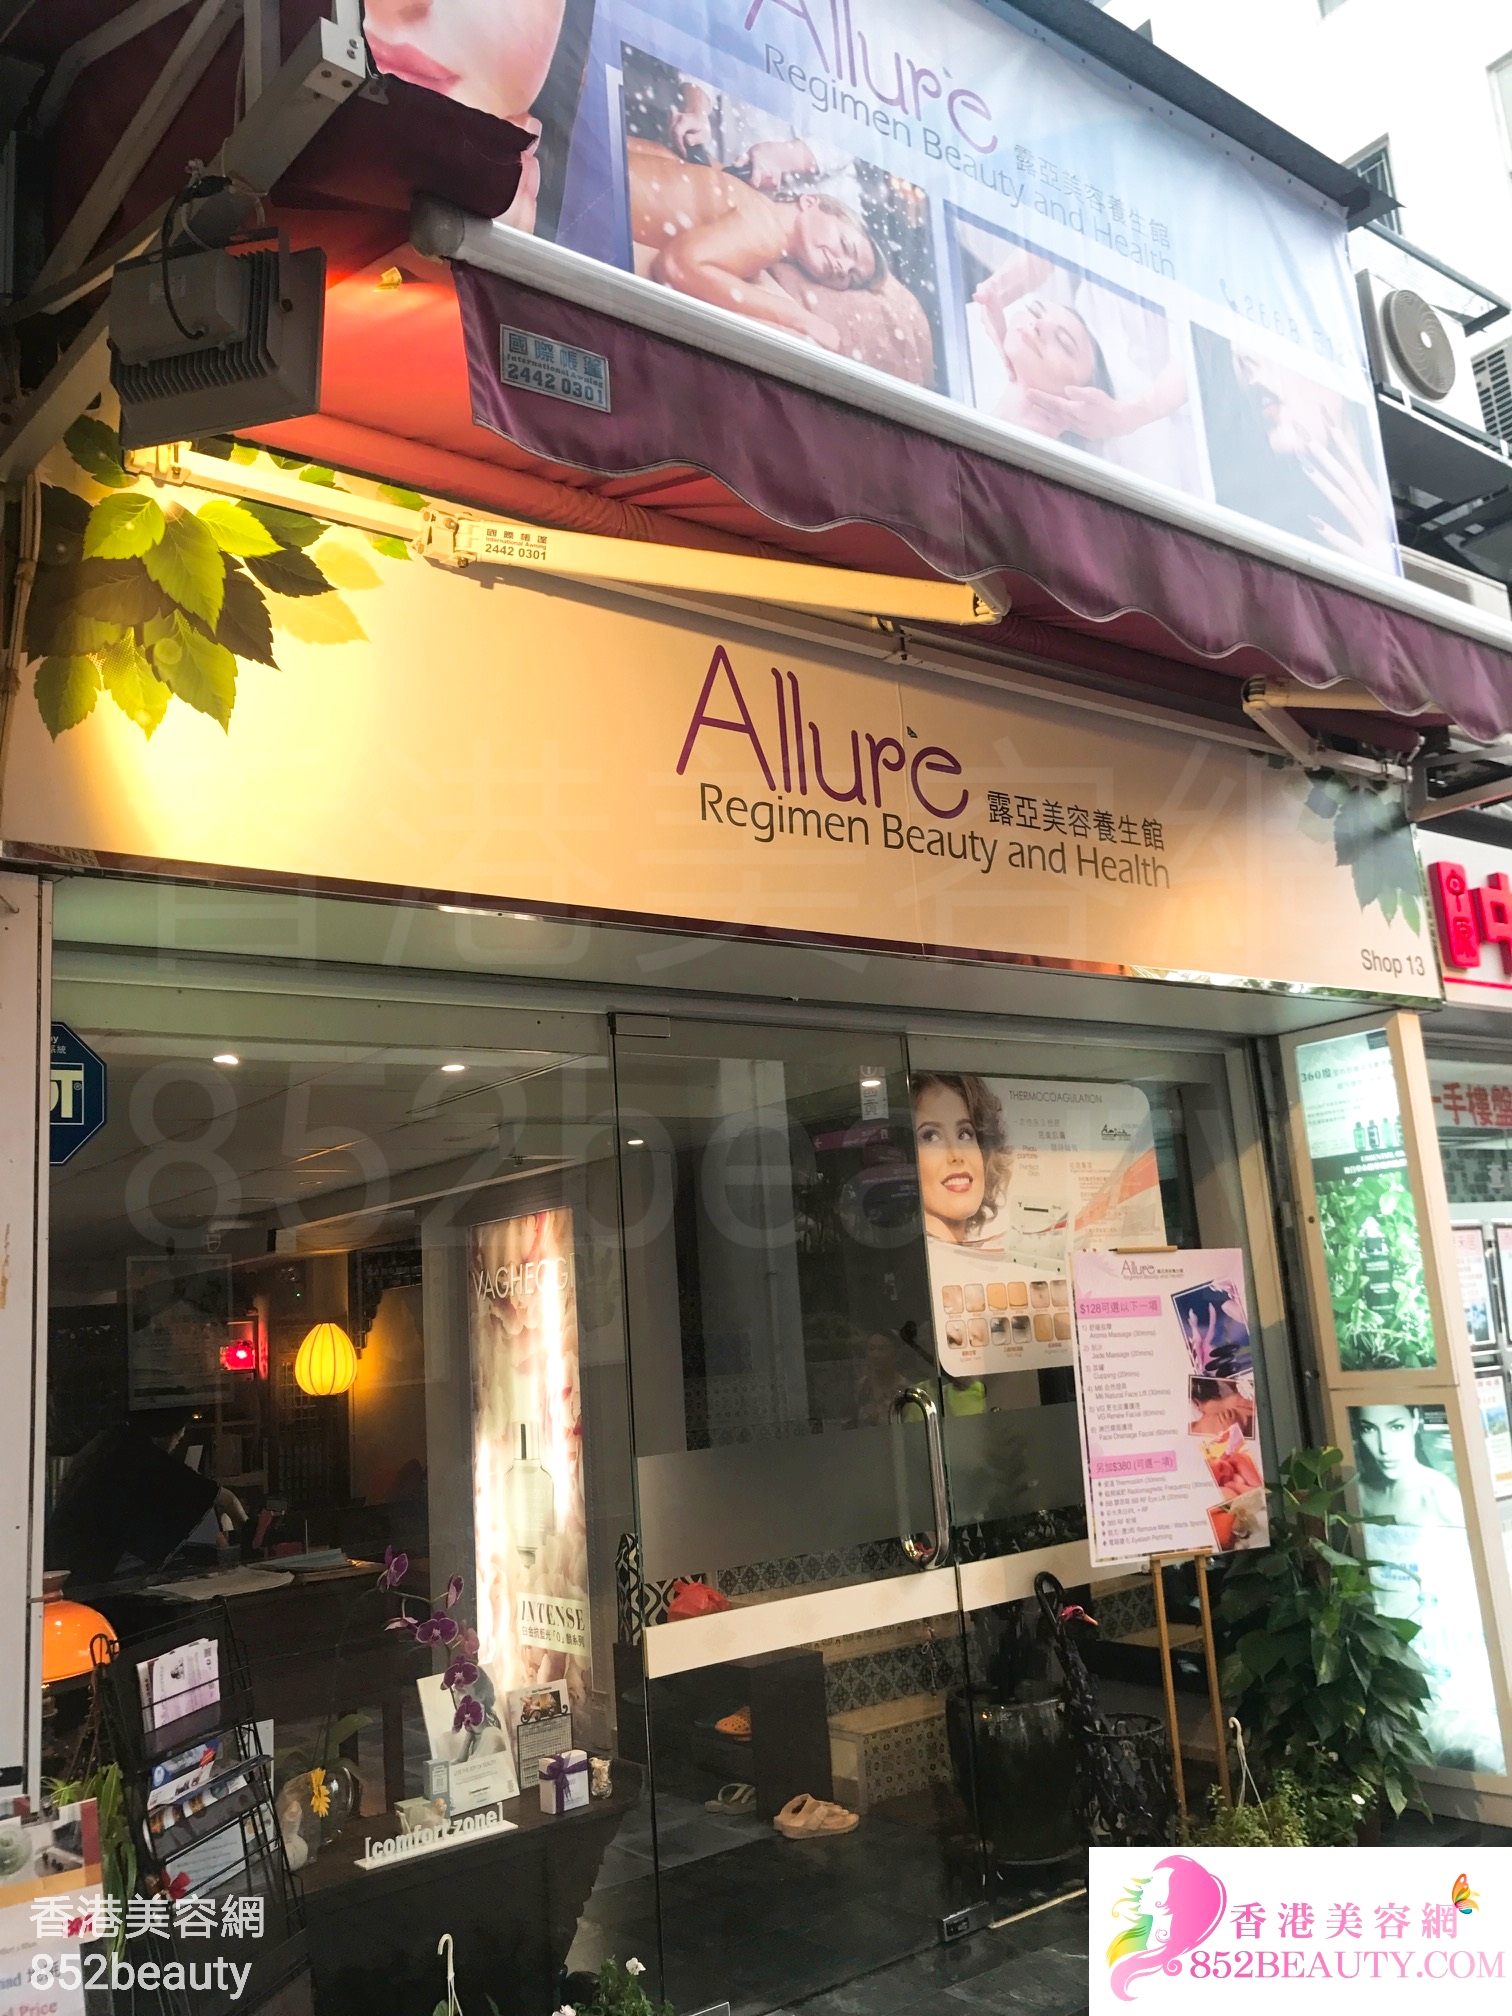 香港美容網 Hong Kong Beauty Salon 美容院 / 美容師: Allure Regimen Beauty and Health 露亞美容養生館 (西貢旗艦店)